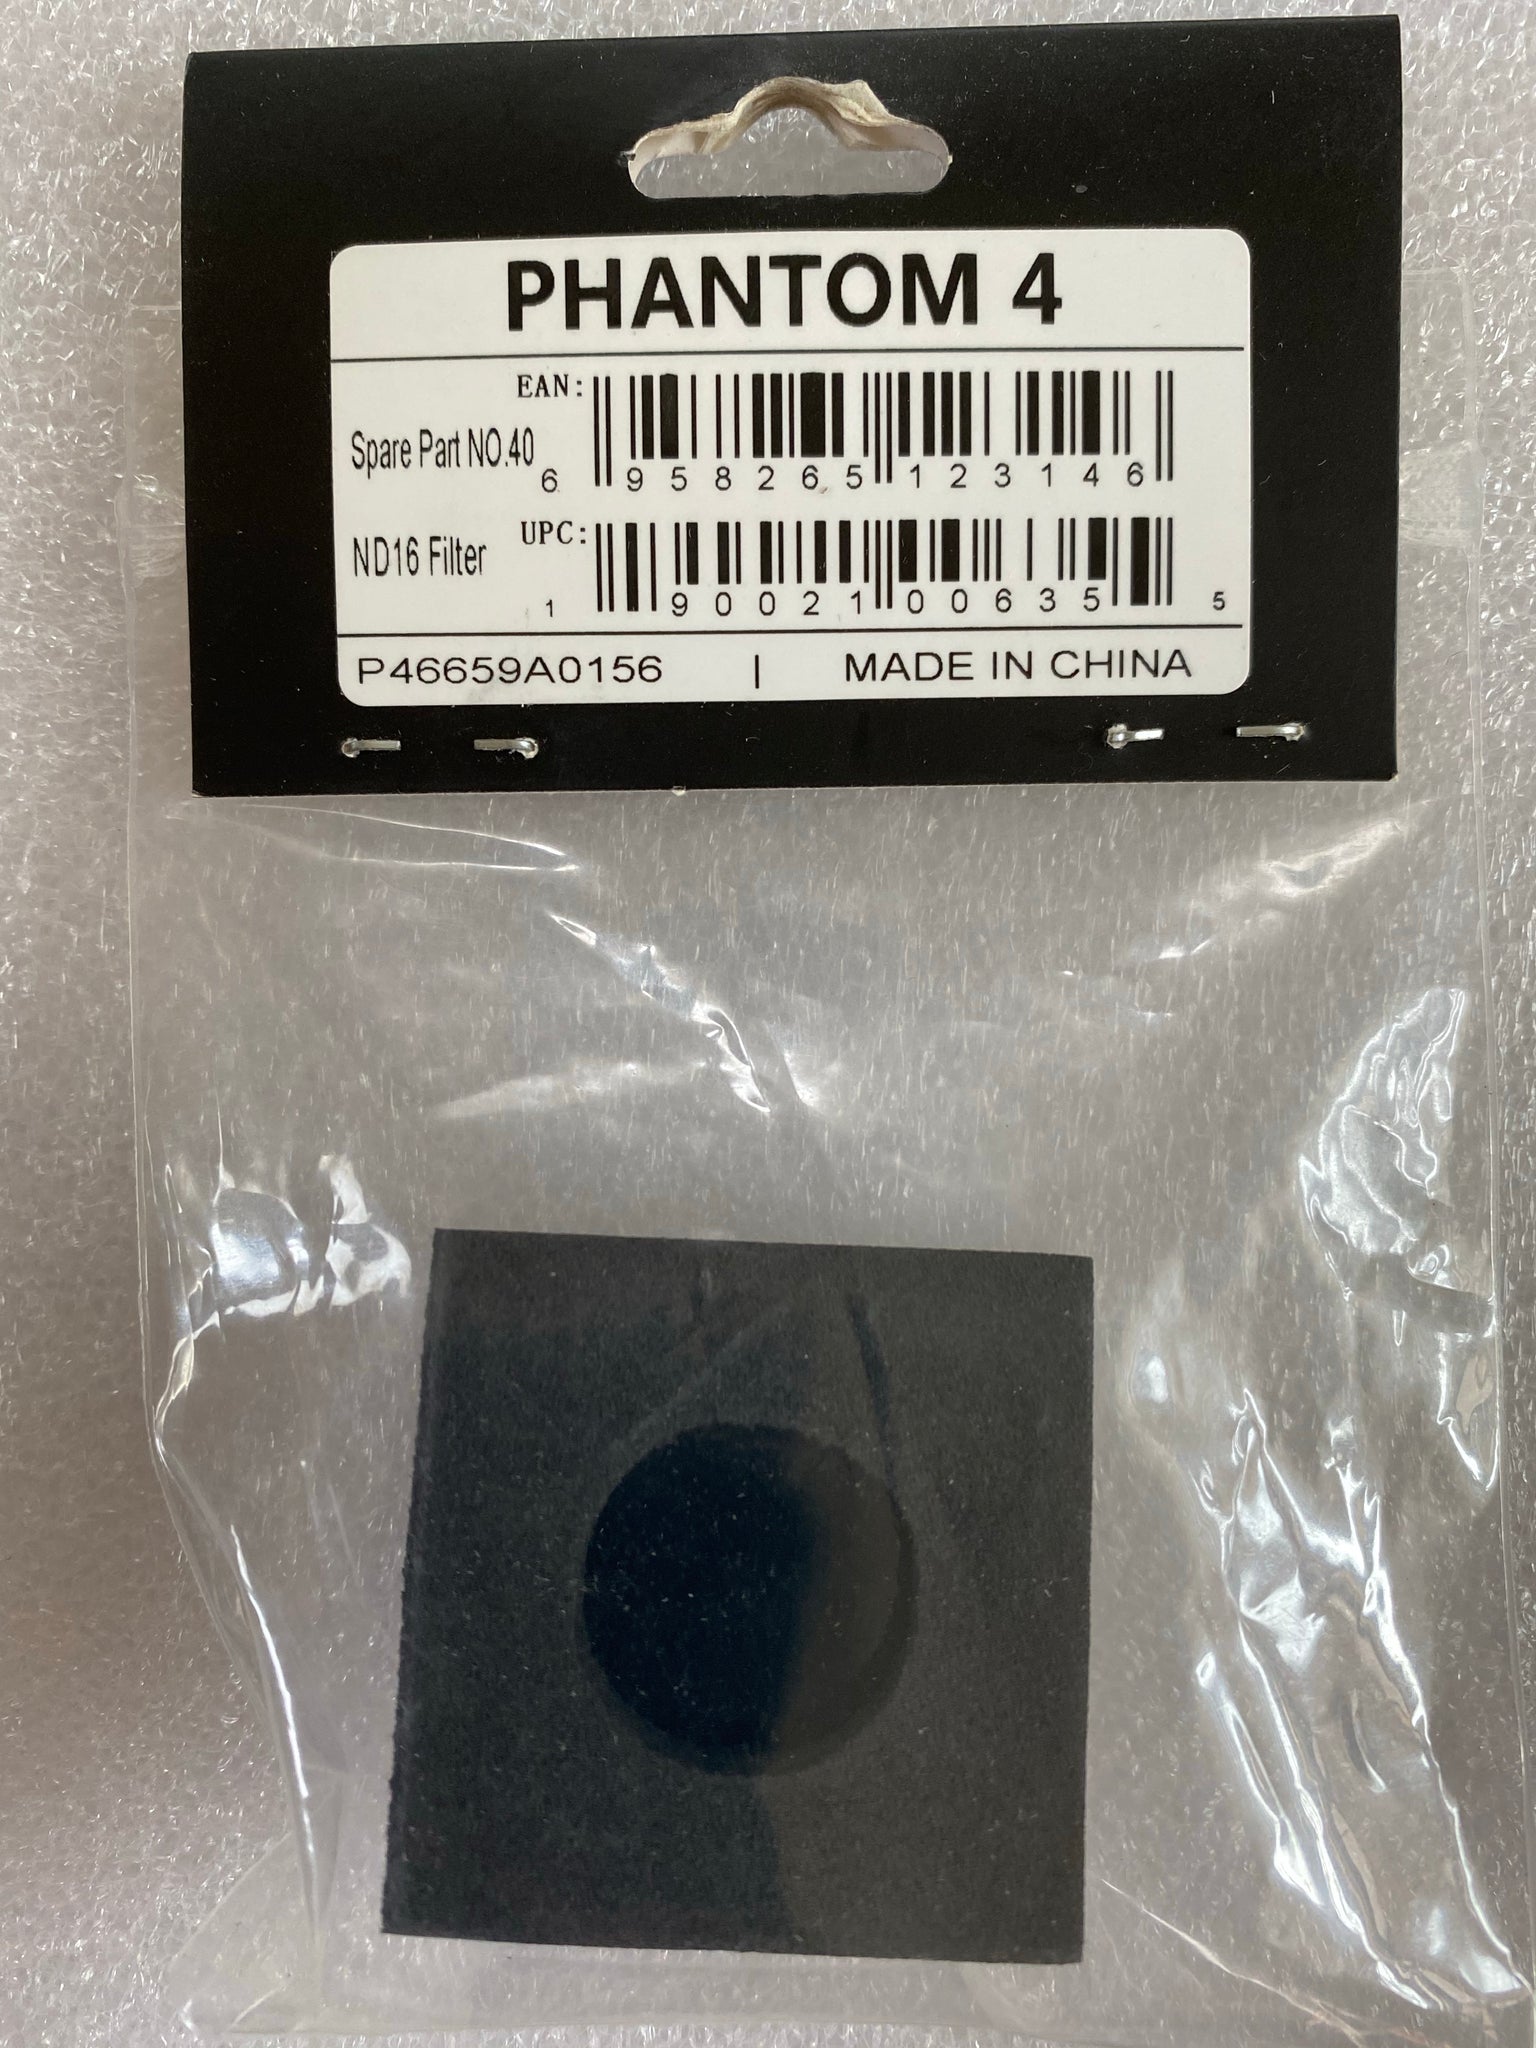 Phantom 4 Part No. 40 ND16 Filter